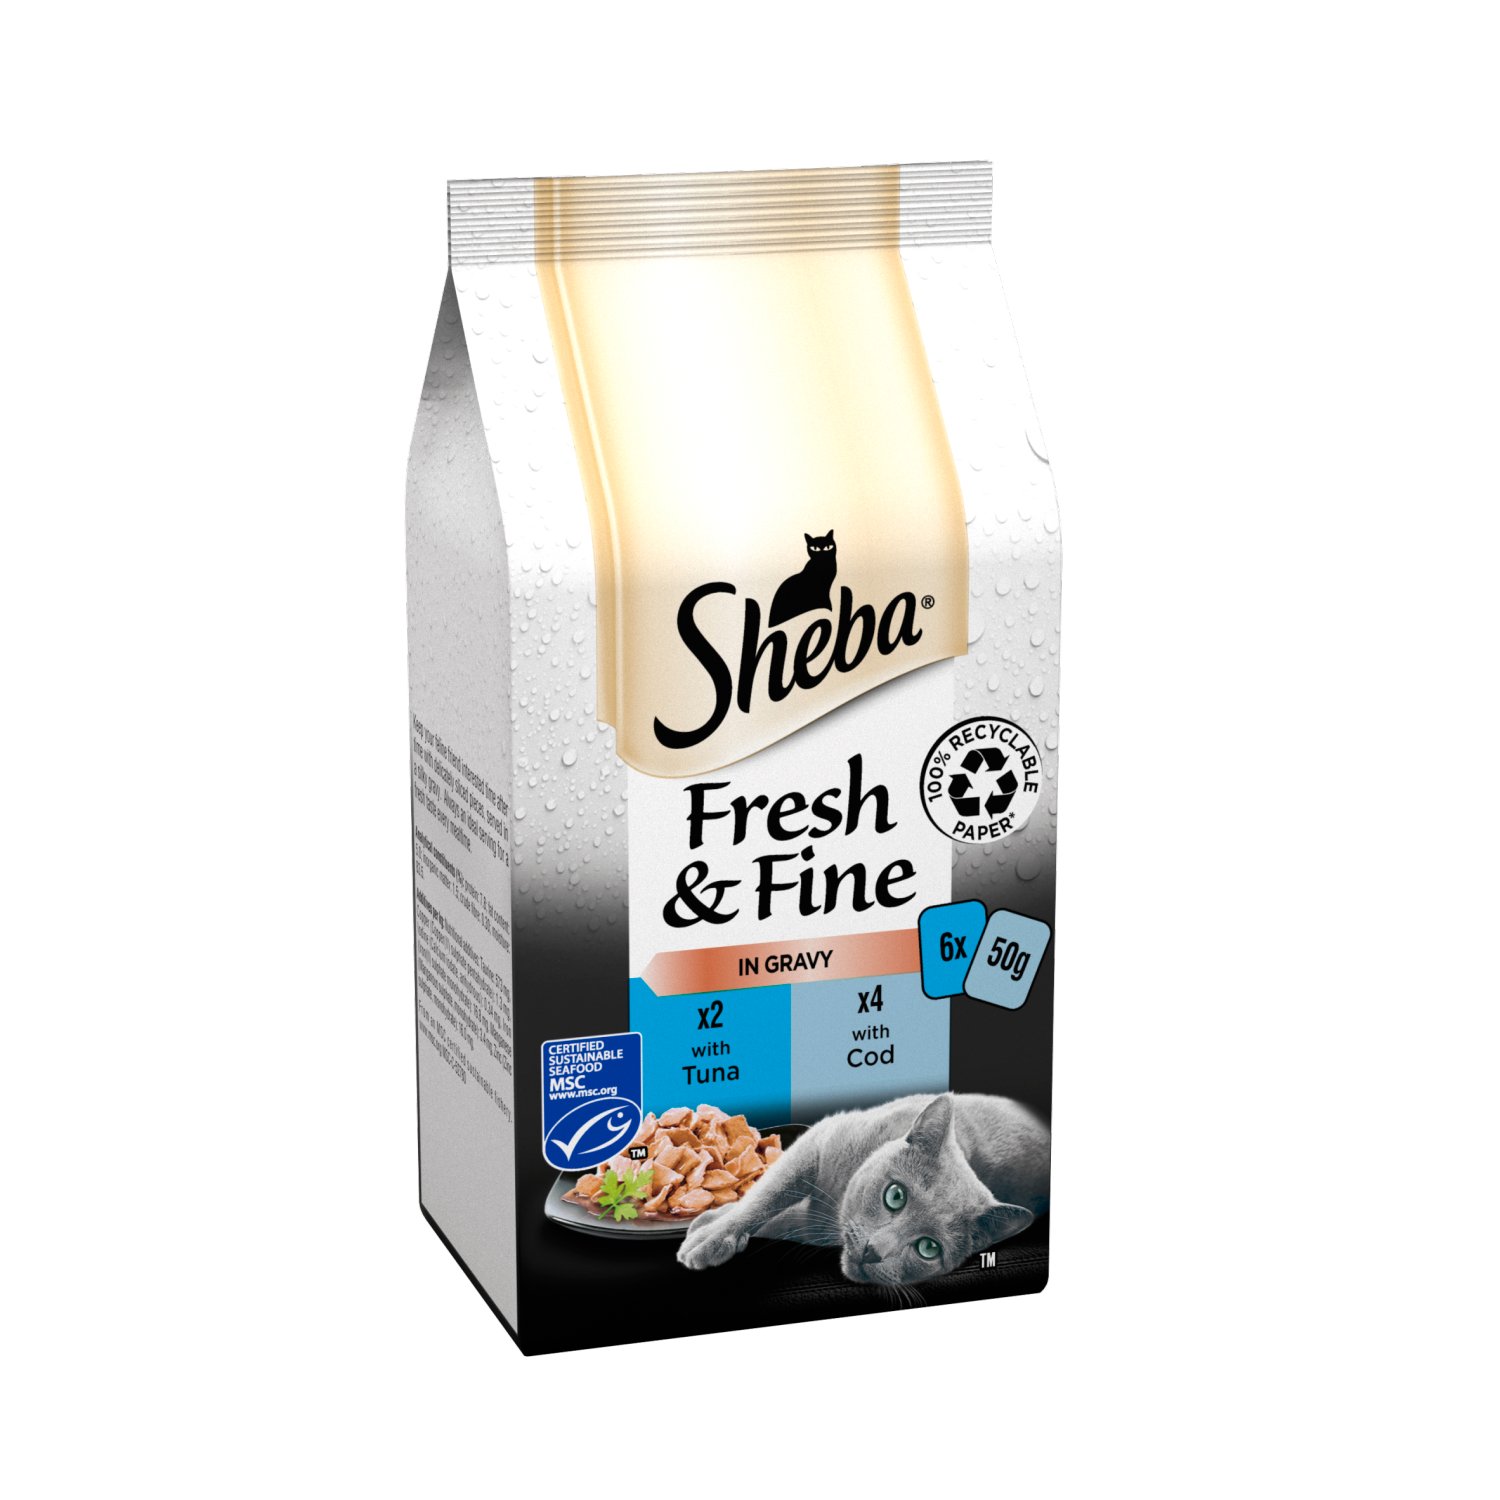 Sheba Fresh & Fine Fish in Gravy Cat Food 6 Pack (300 g)